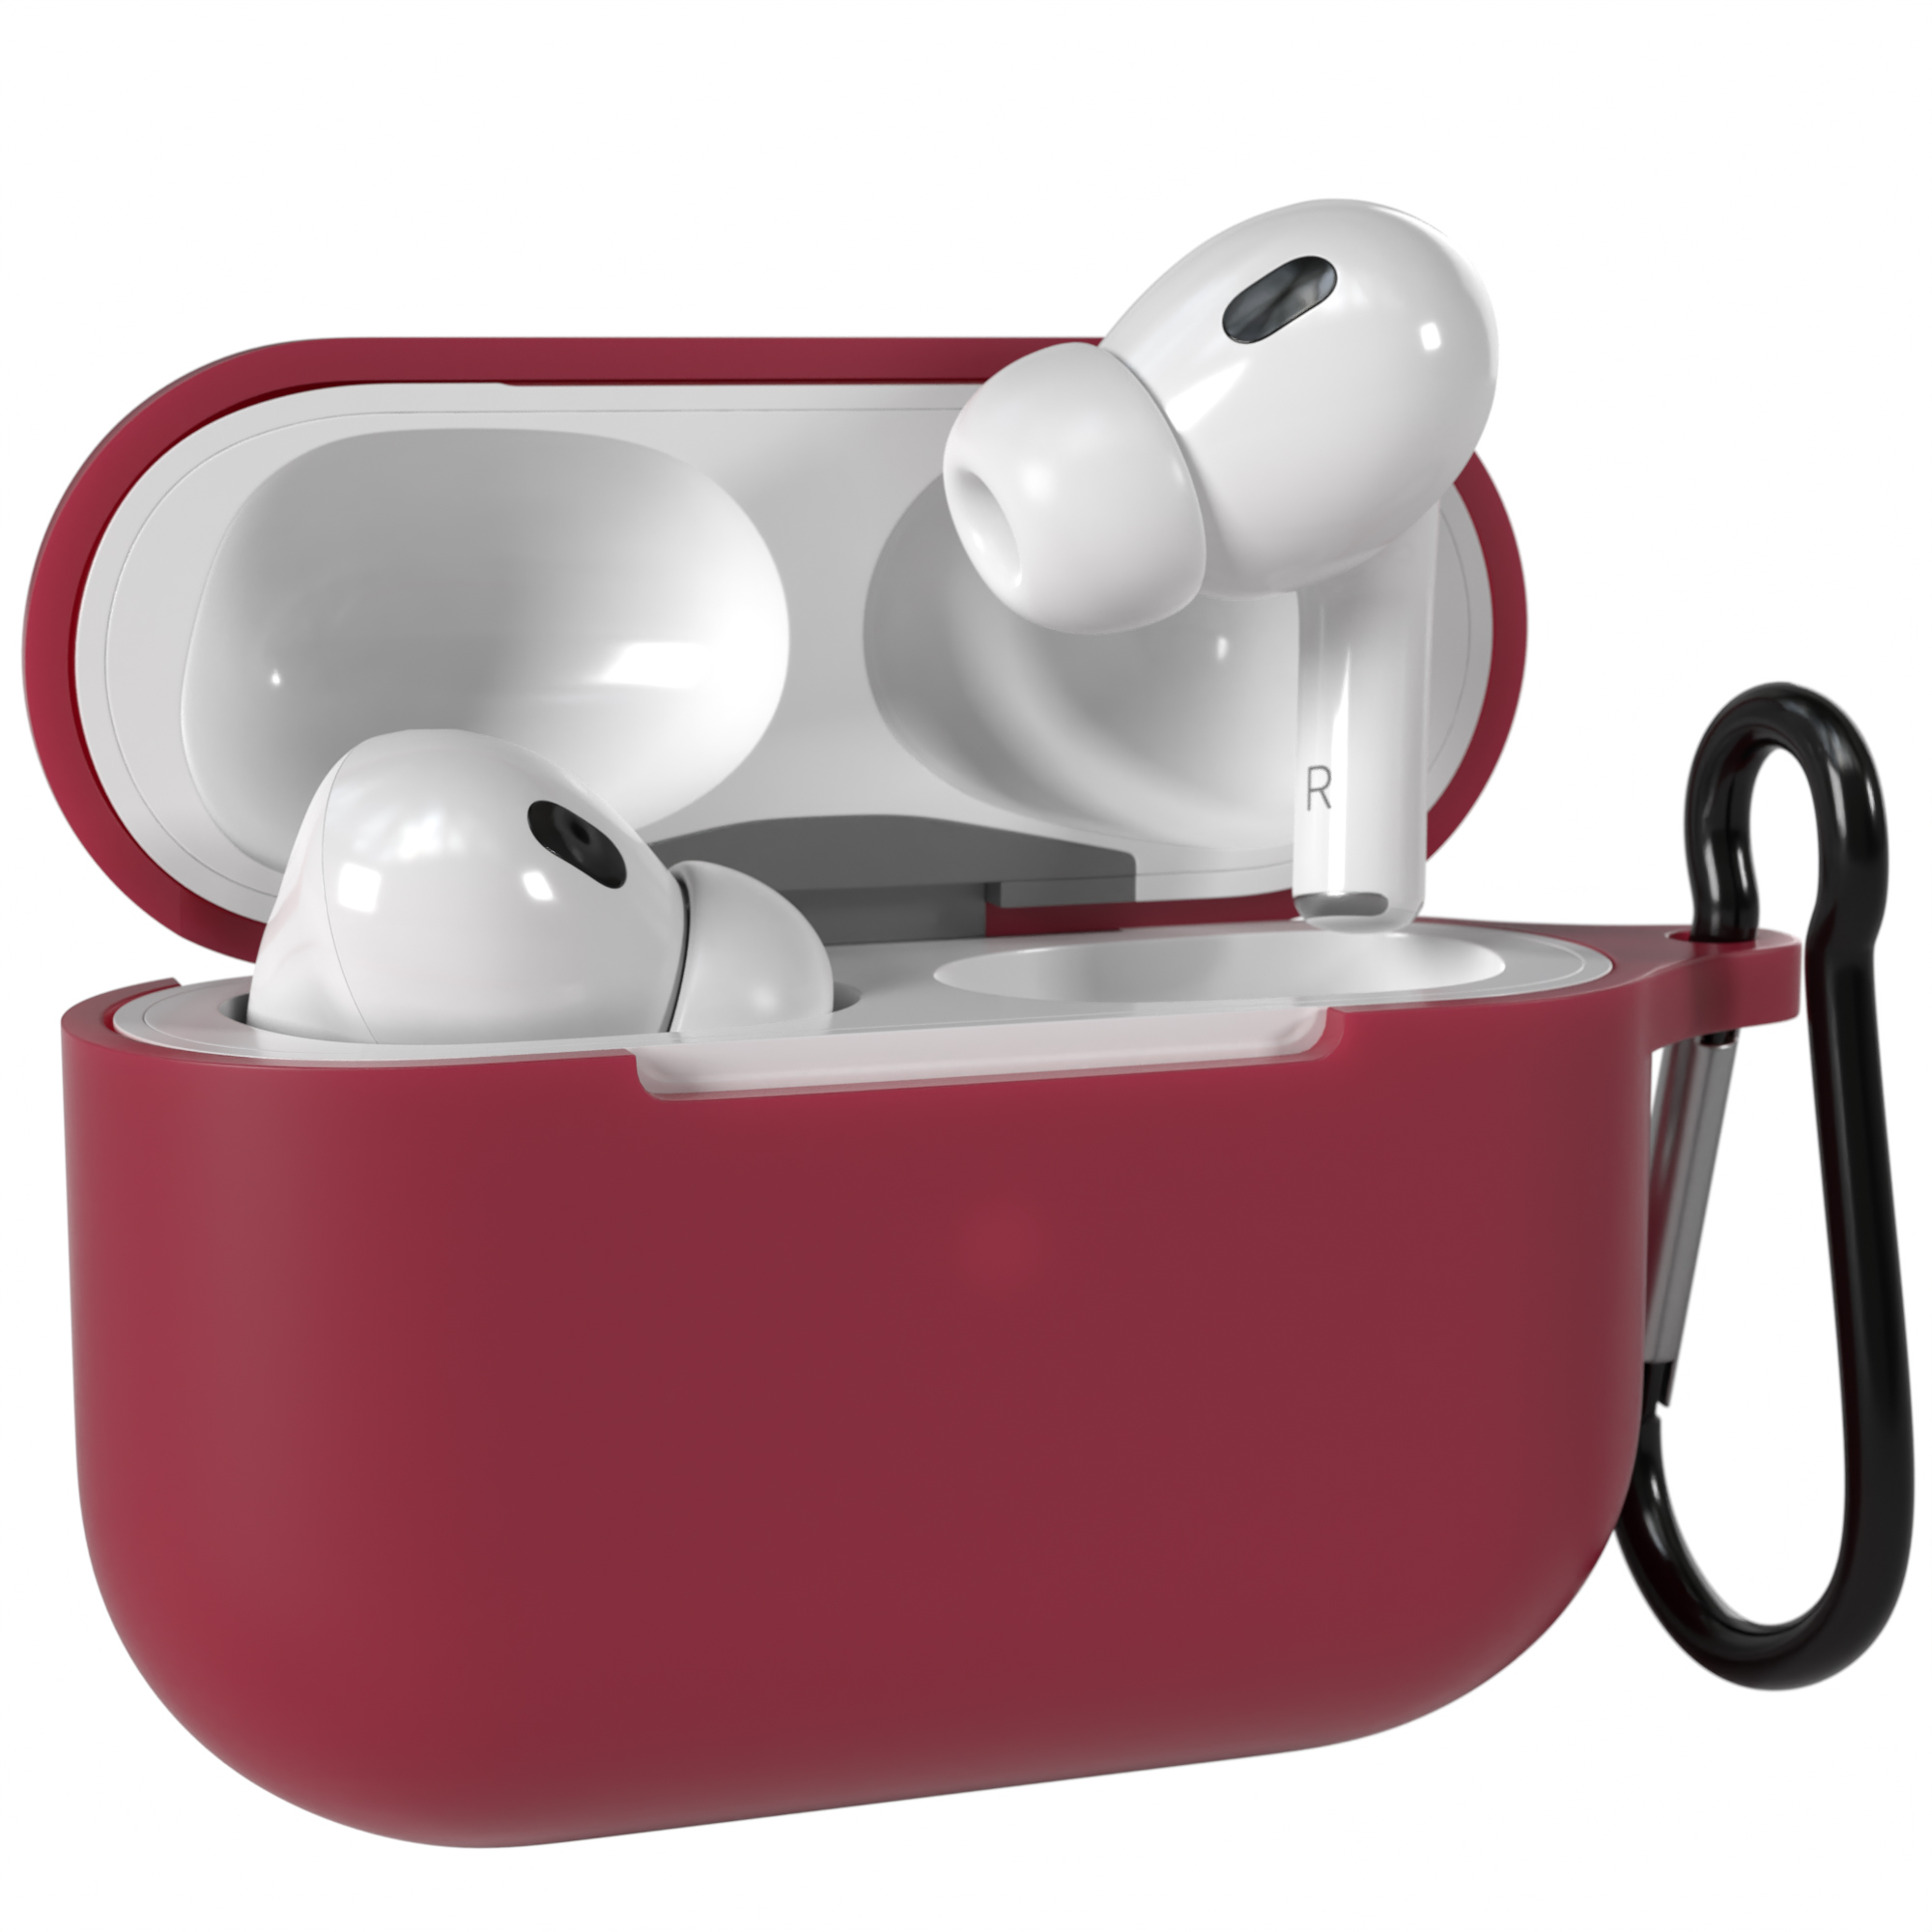 Dunkelrot EAZY Rot Case Sleeve passend Schutzhülle Pro CASE Apple / 2 AirPods Silikon für: